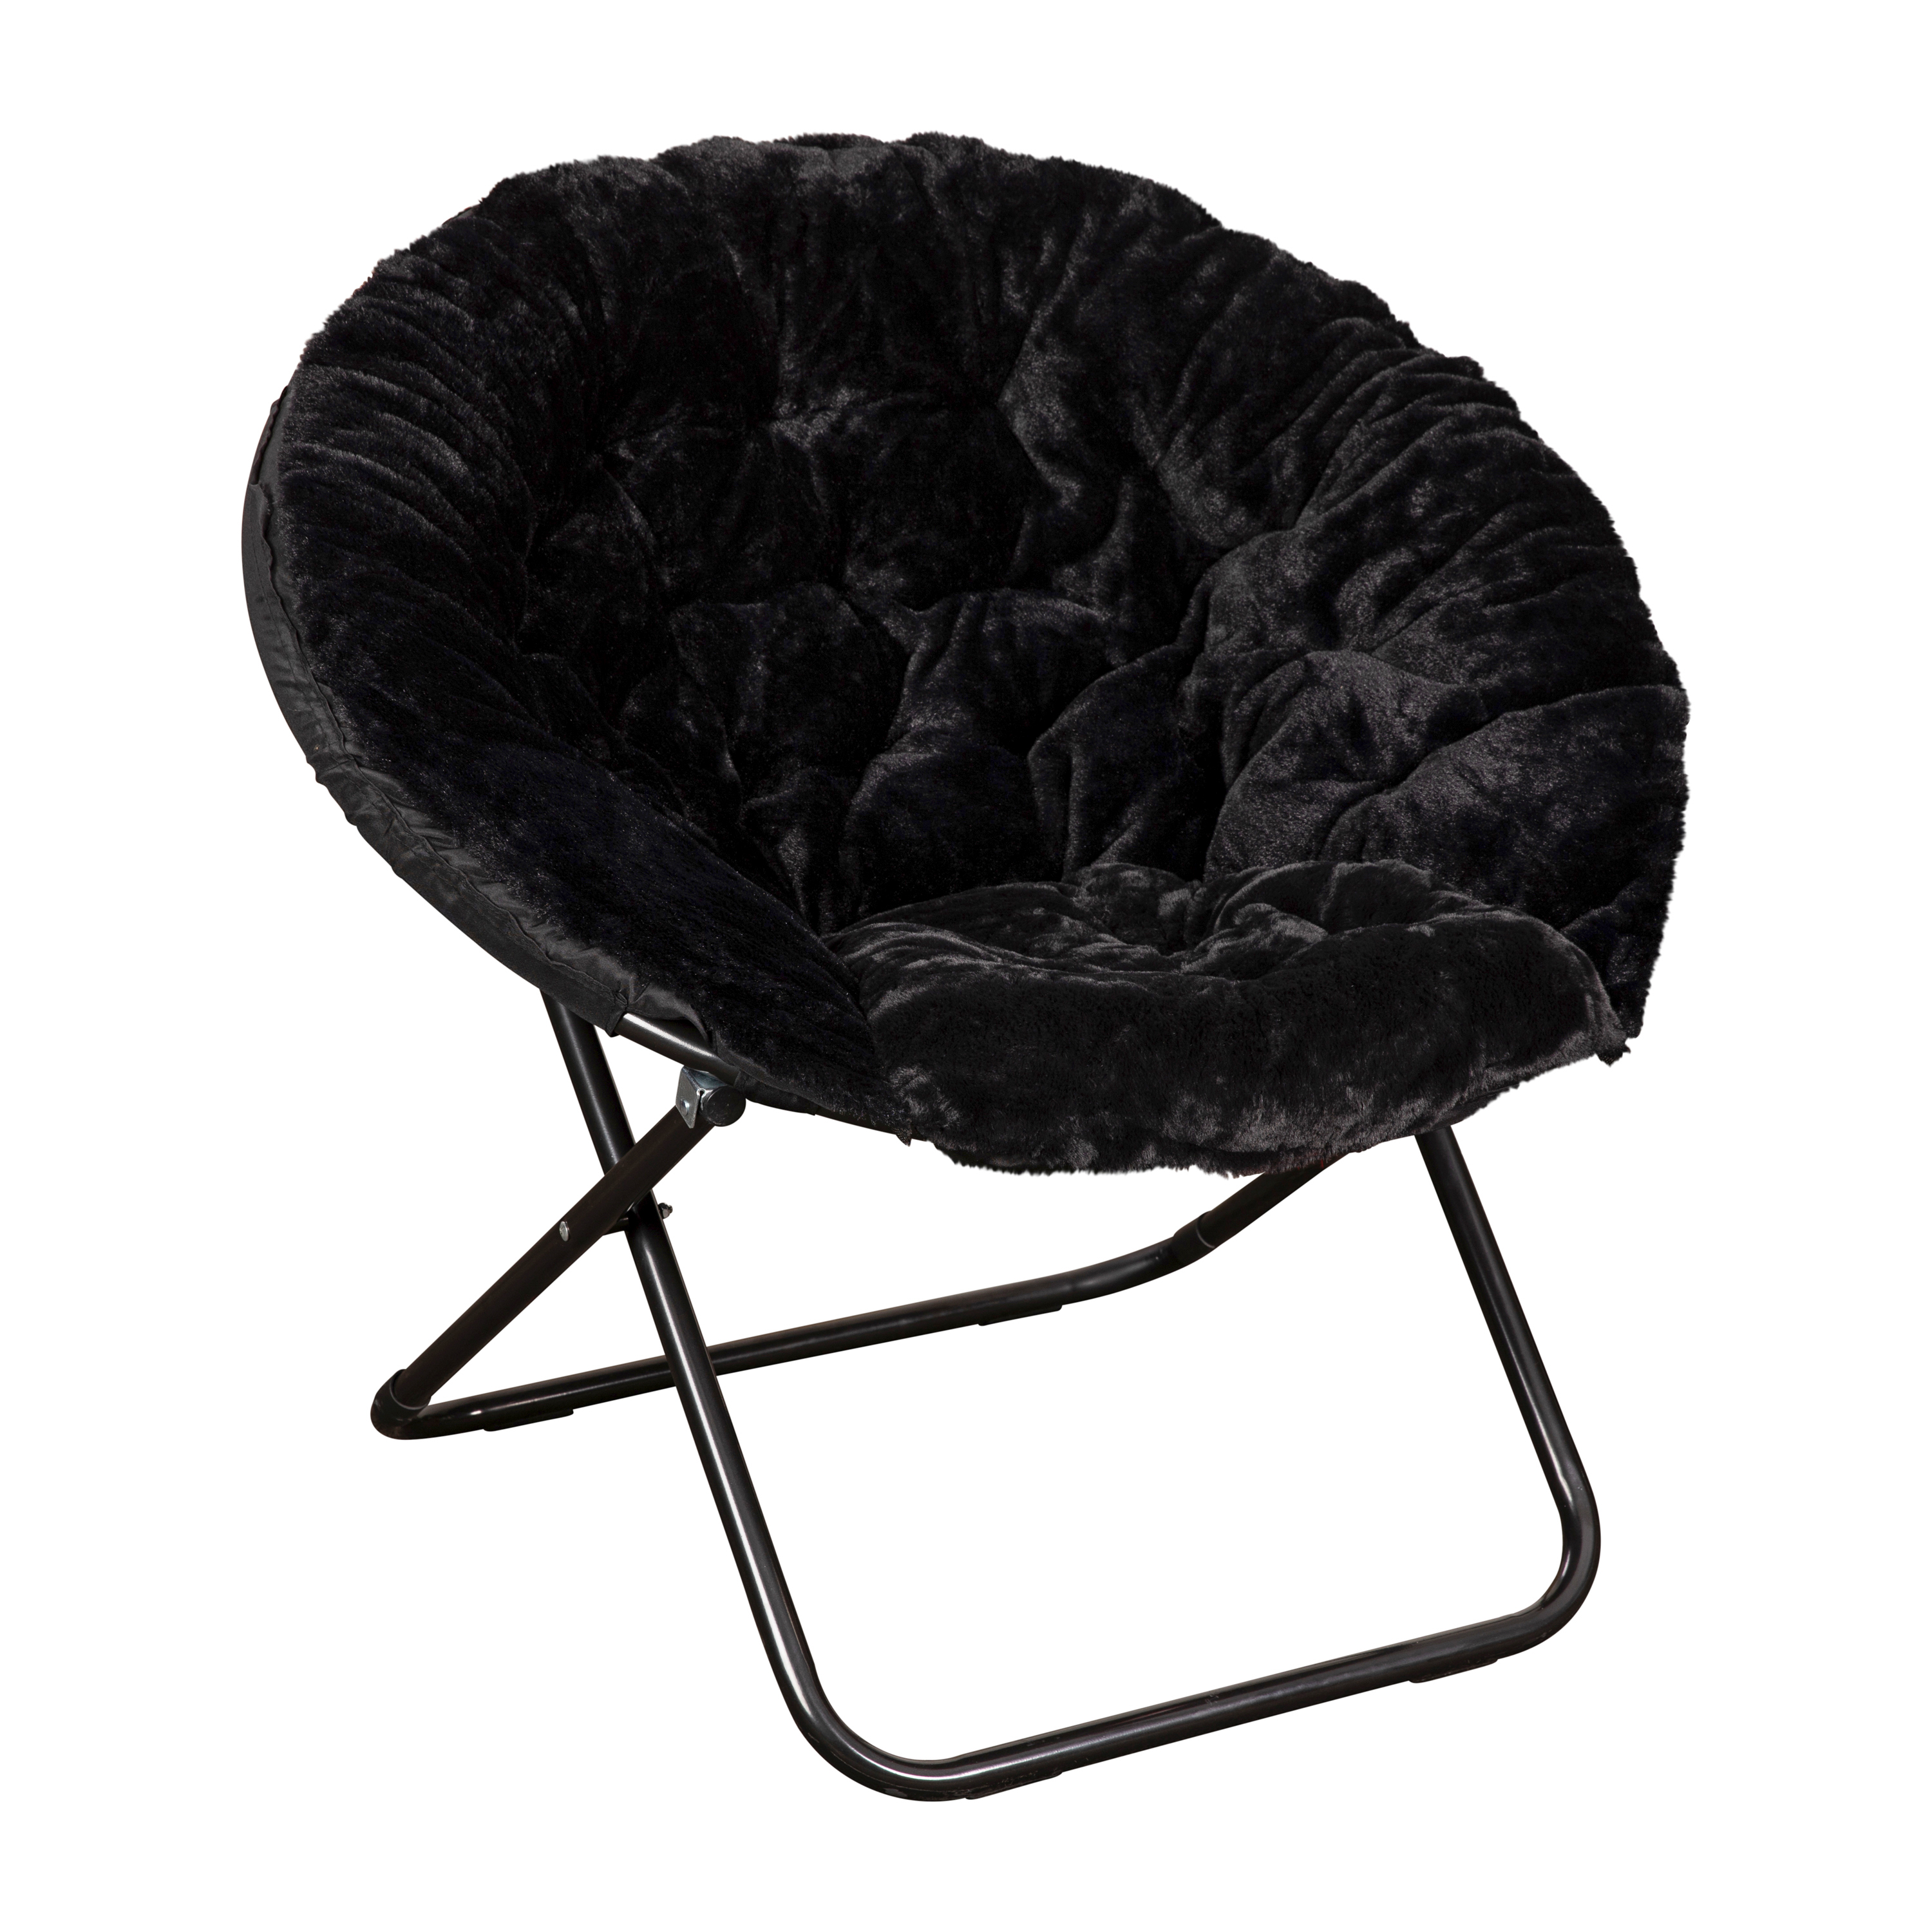 Flash Furniture FV-FMC-025-BK-BK-GG 38" Oversize Portable Faux Fur Folding Saucer Moon Chair, Black Faux Fur/Black Frame